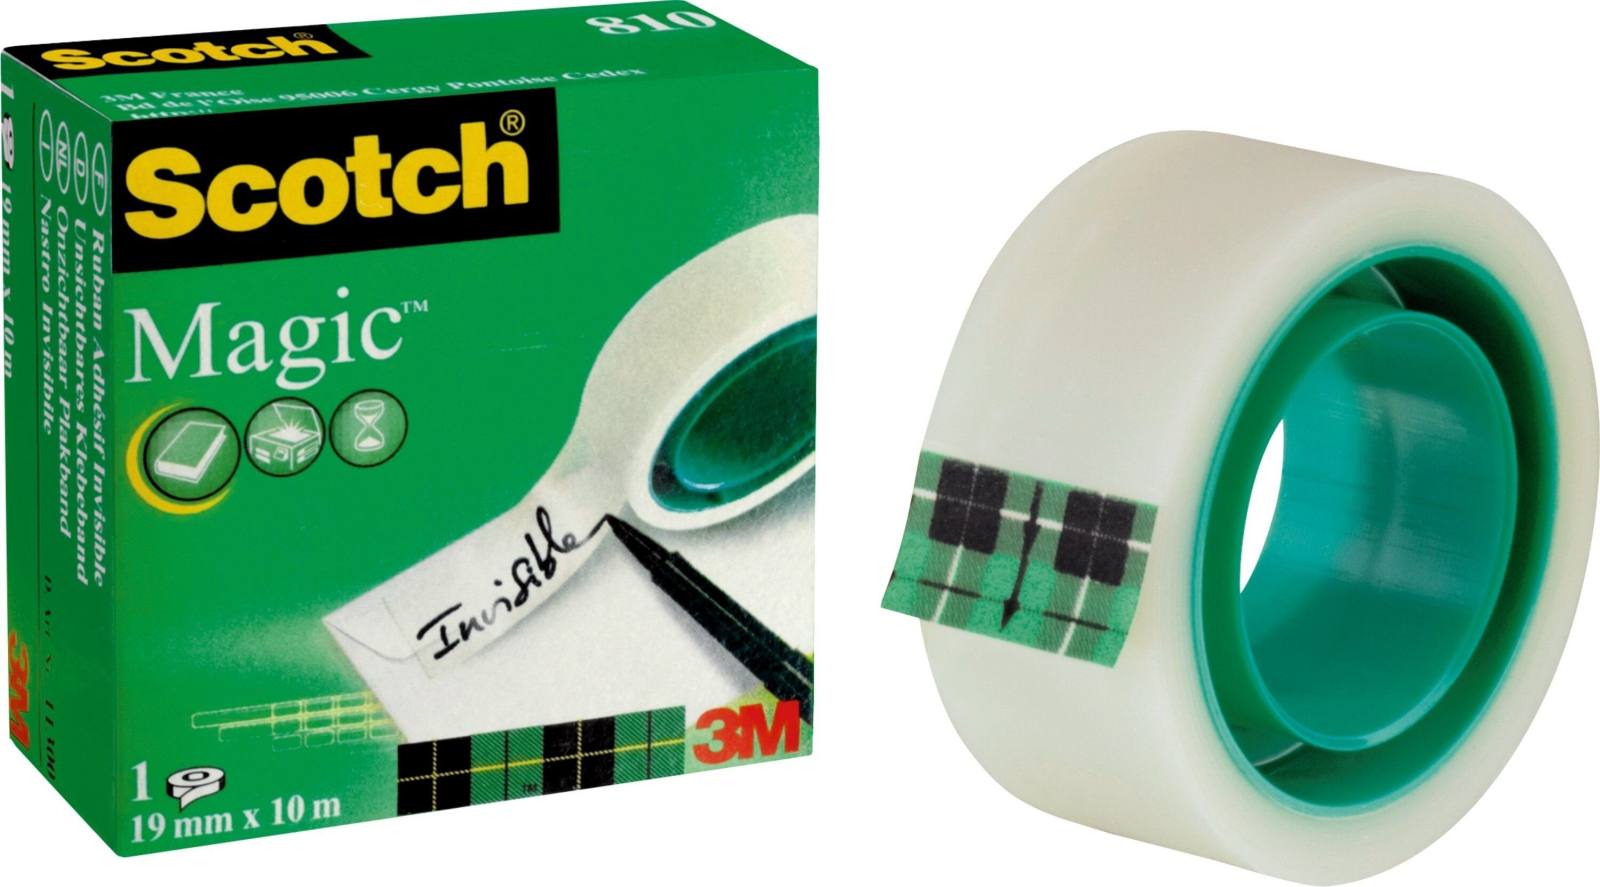 3M Scotch Magic adhesive tape 1 roll 19 mm x 10 m